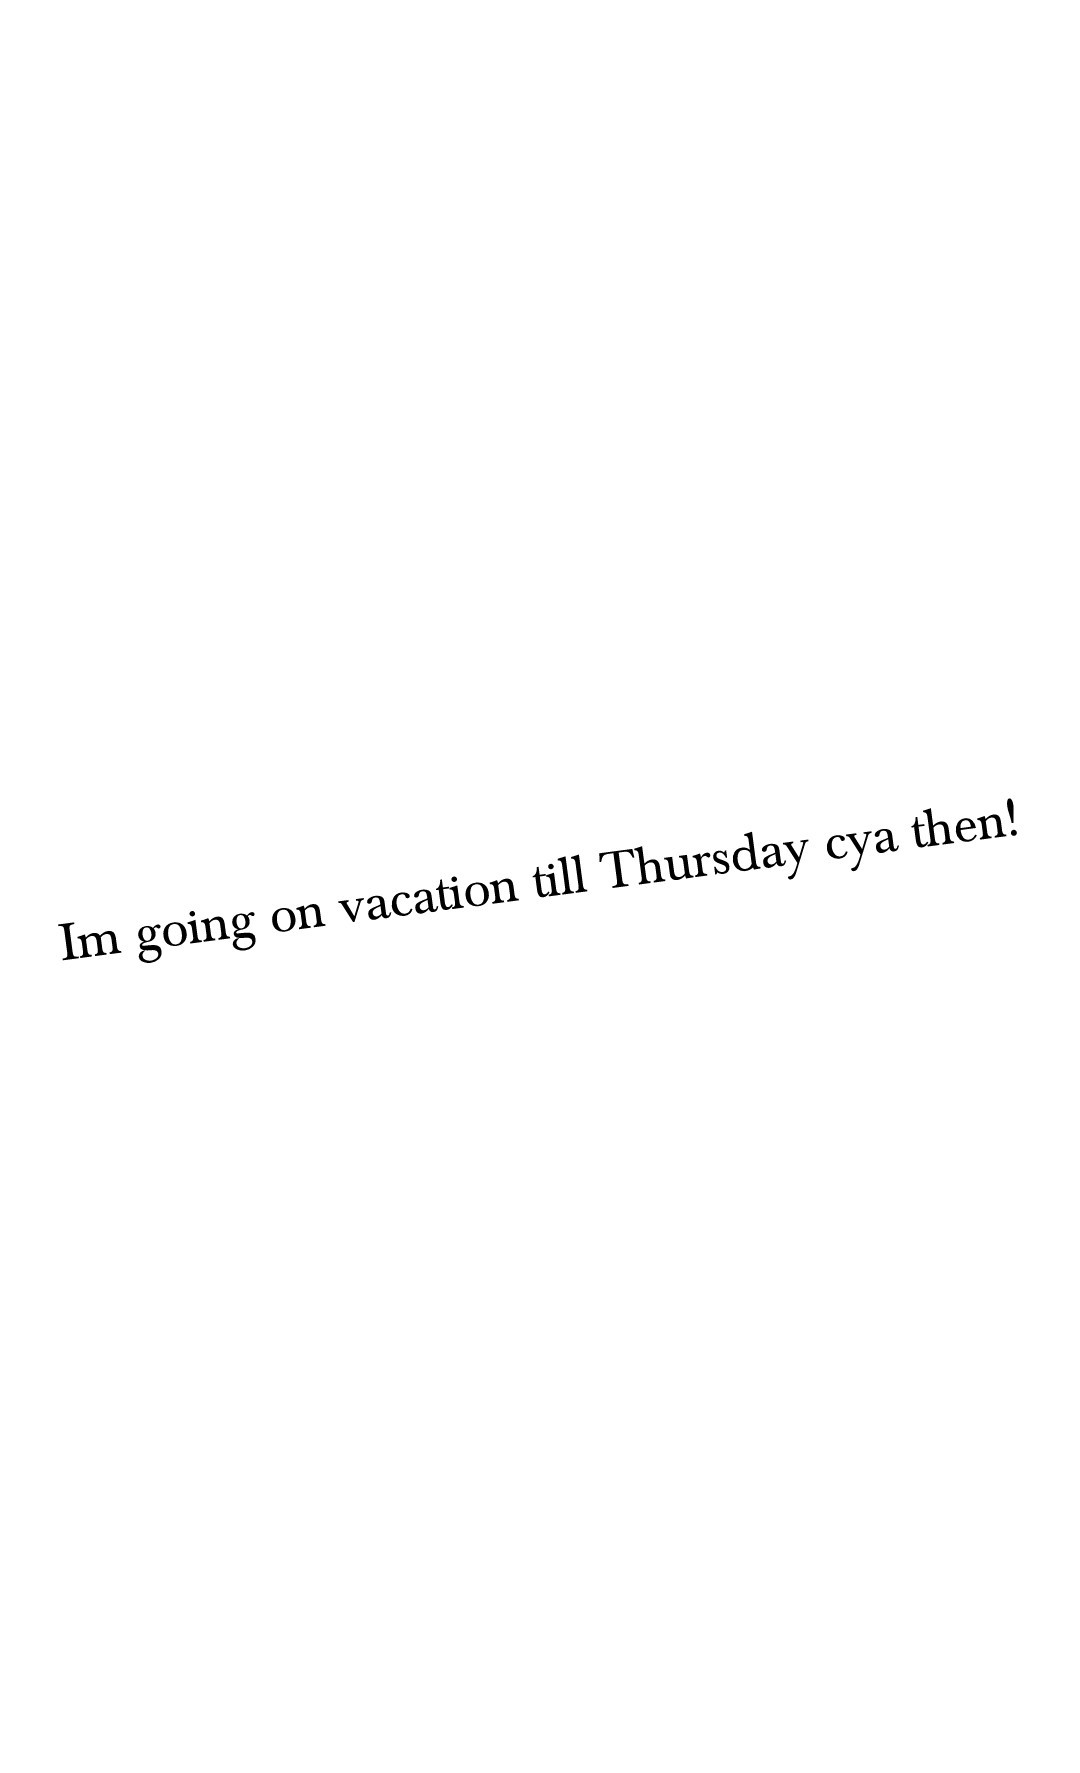 Im going on vacation till Thursday cya then!